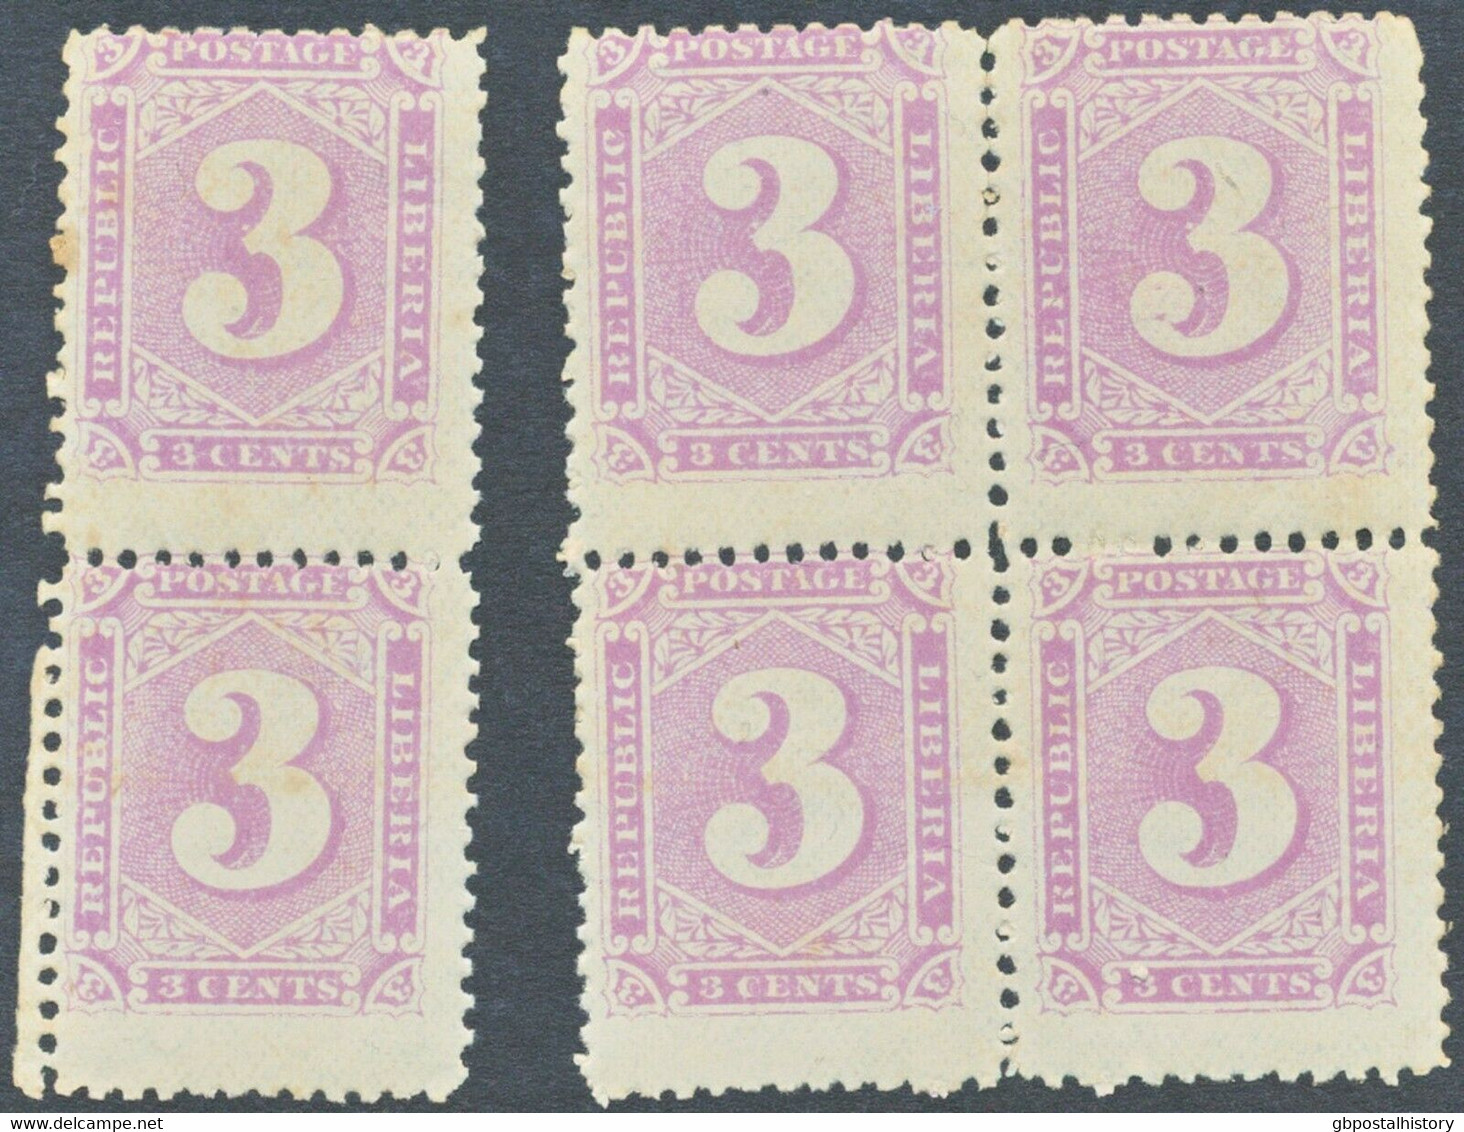 LIBERIA 1886 3 C. Purple Digit, Superb Rare U/M Mint Never Hinged Block Of Four And Very Fine Vertical Pair, VARIETIES: - Liberia